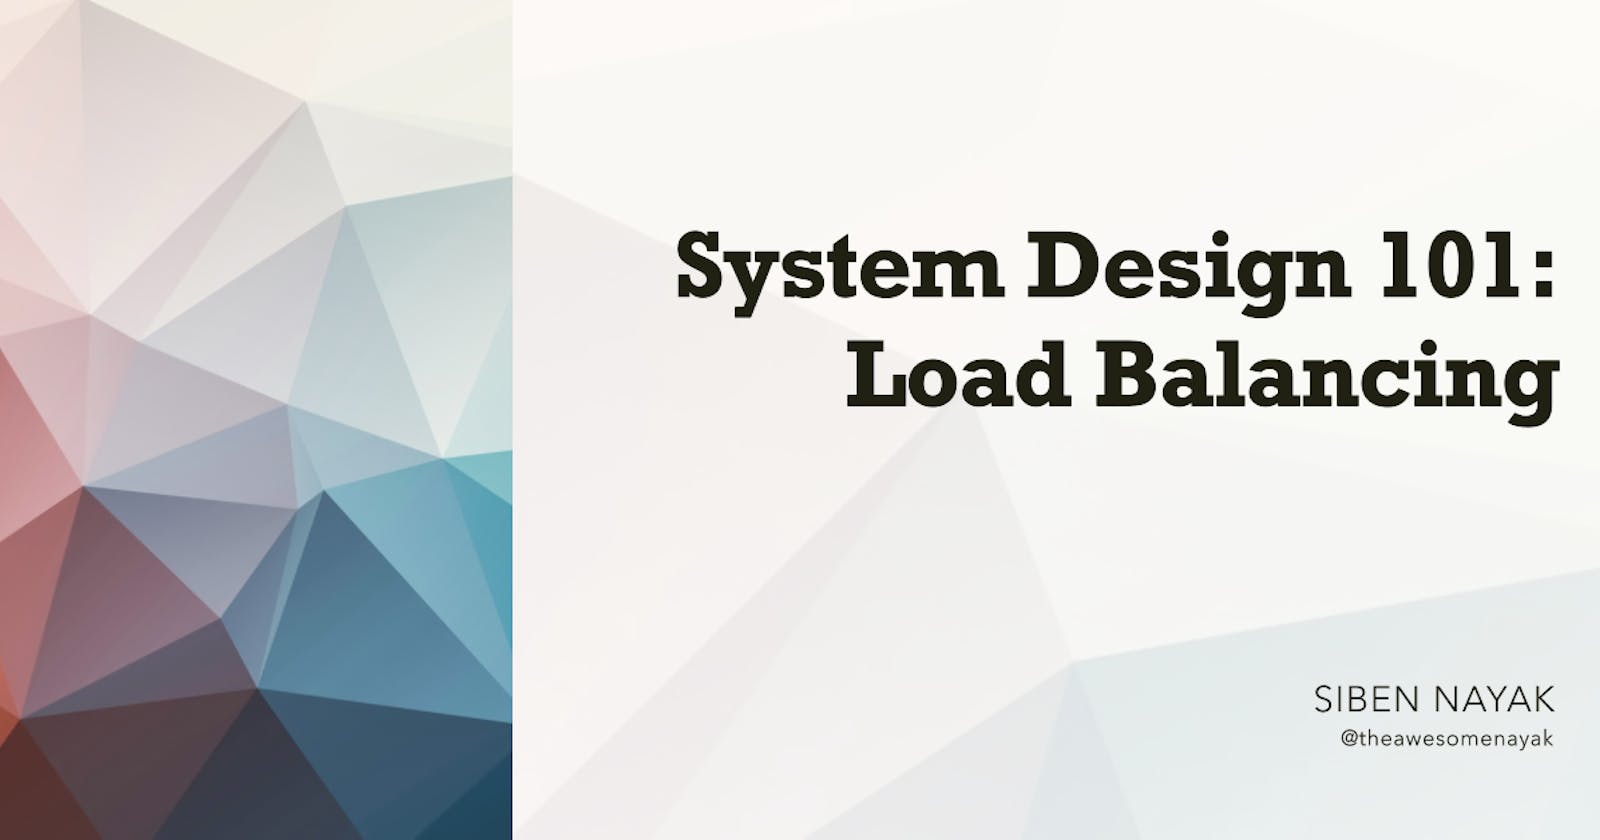 System Design 101 - Load Balancing